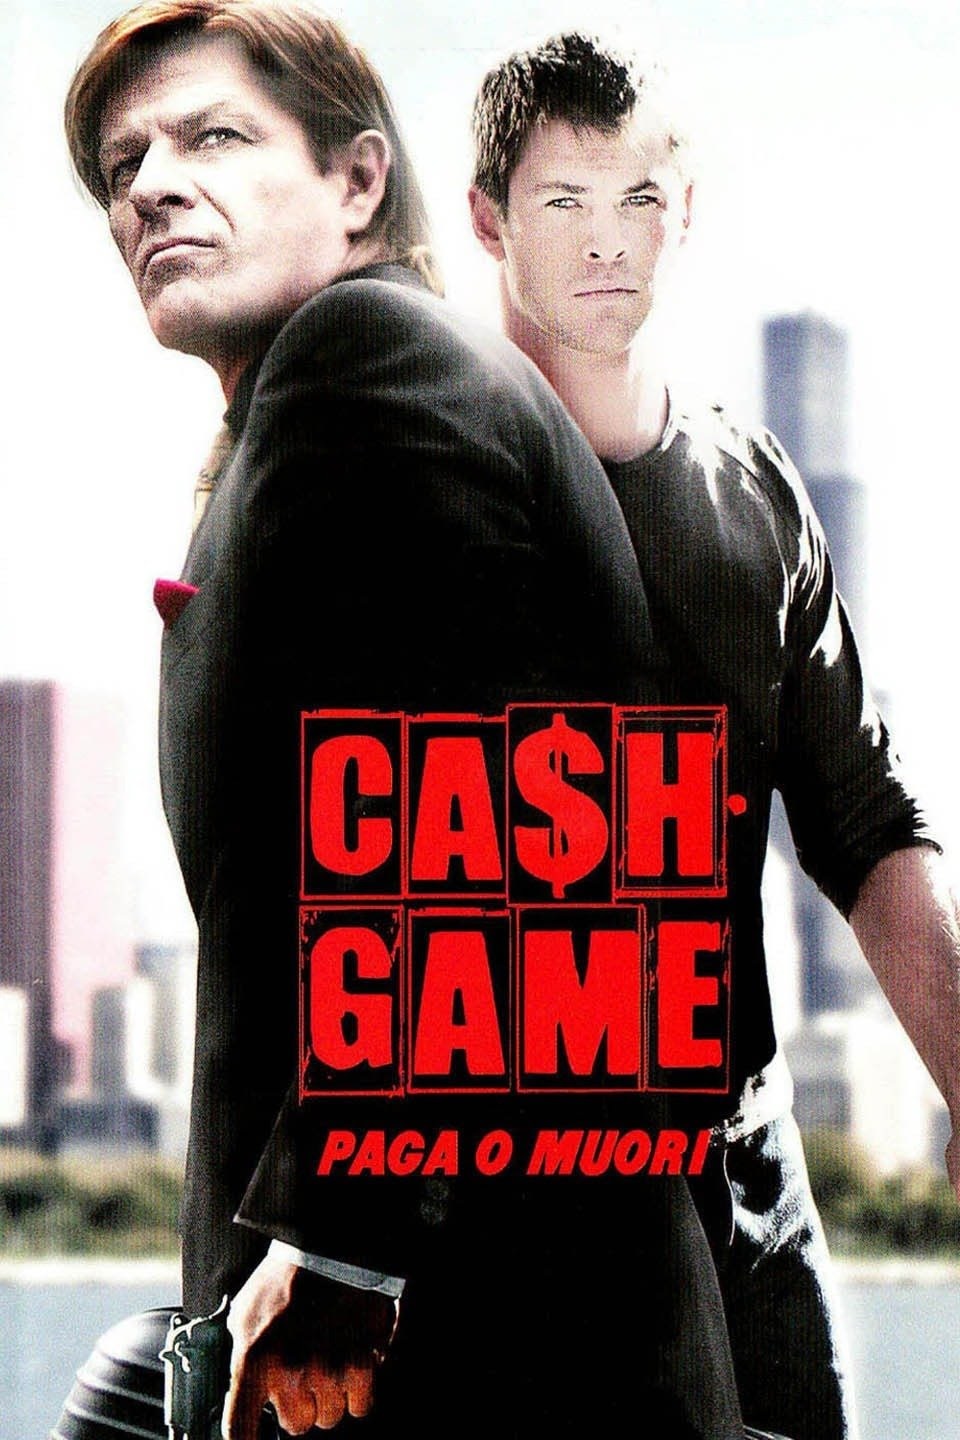 Cash Game – Paga o muori [HD] (2010)